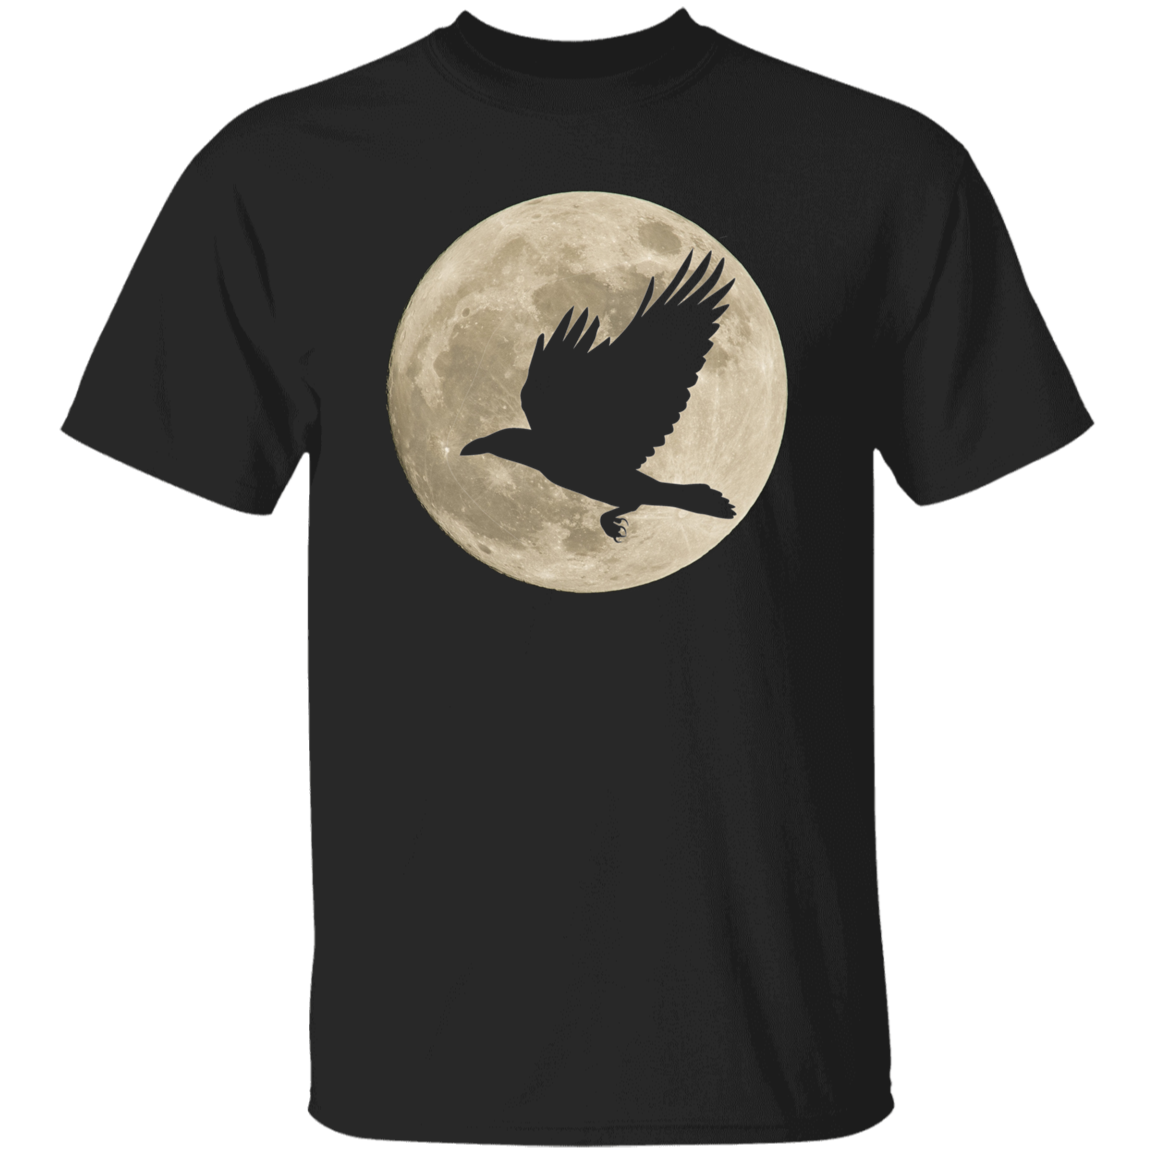 Raven Moon - T-shirts, Hoodies and Sweatshirts